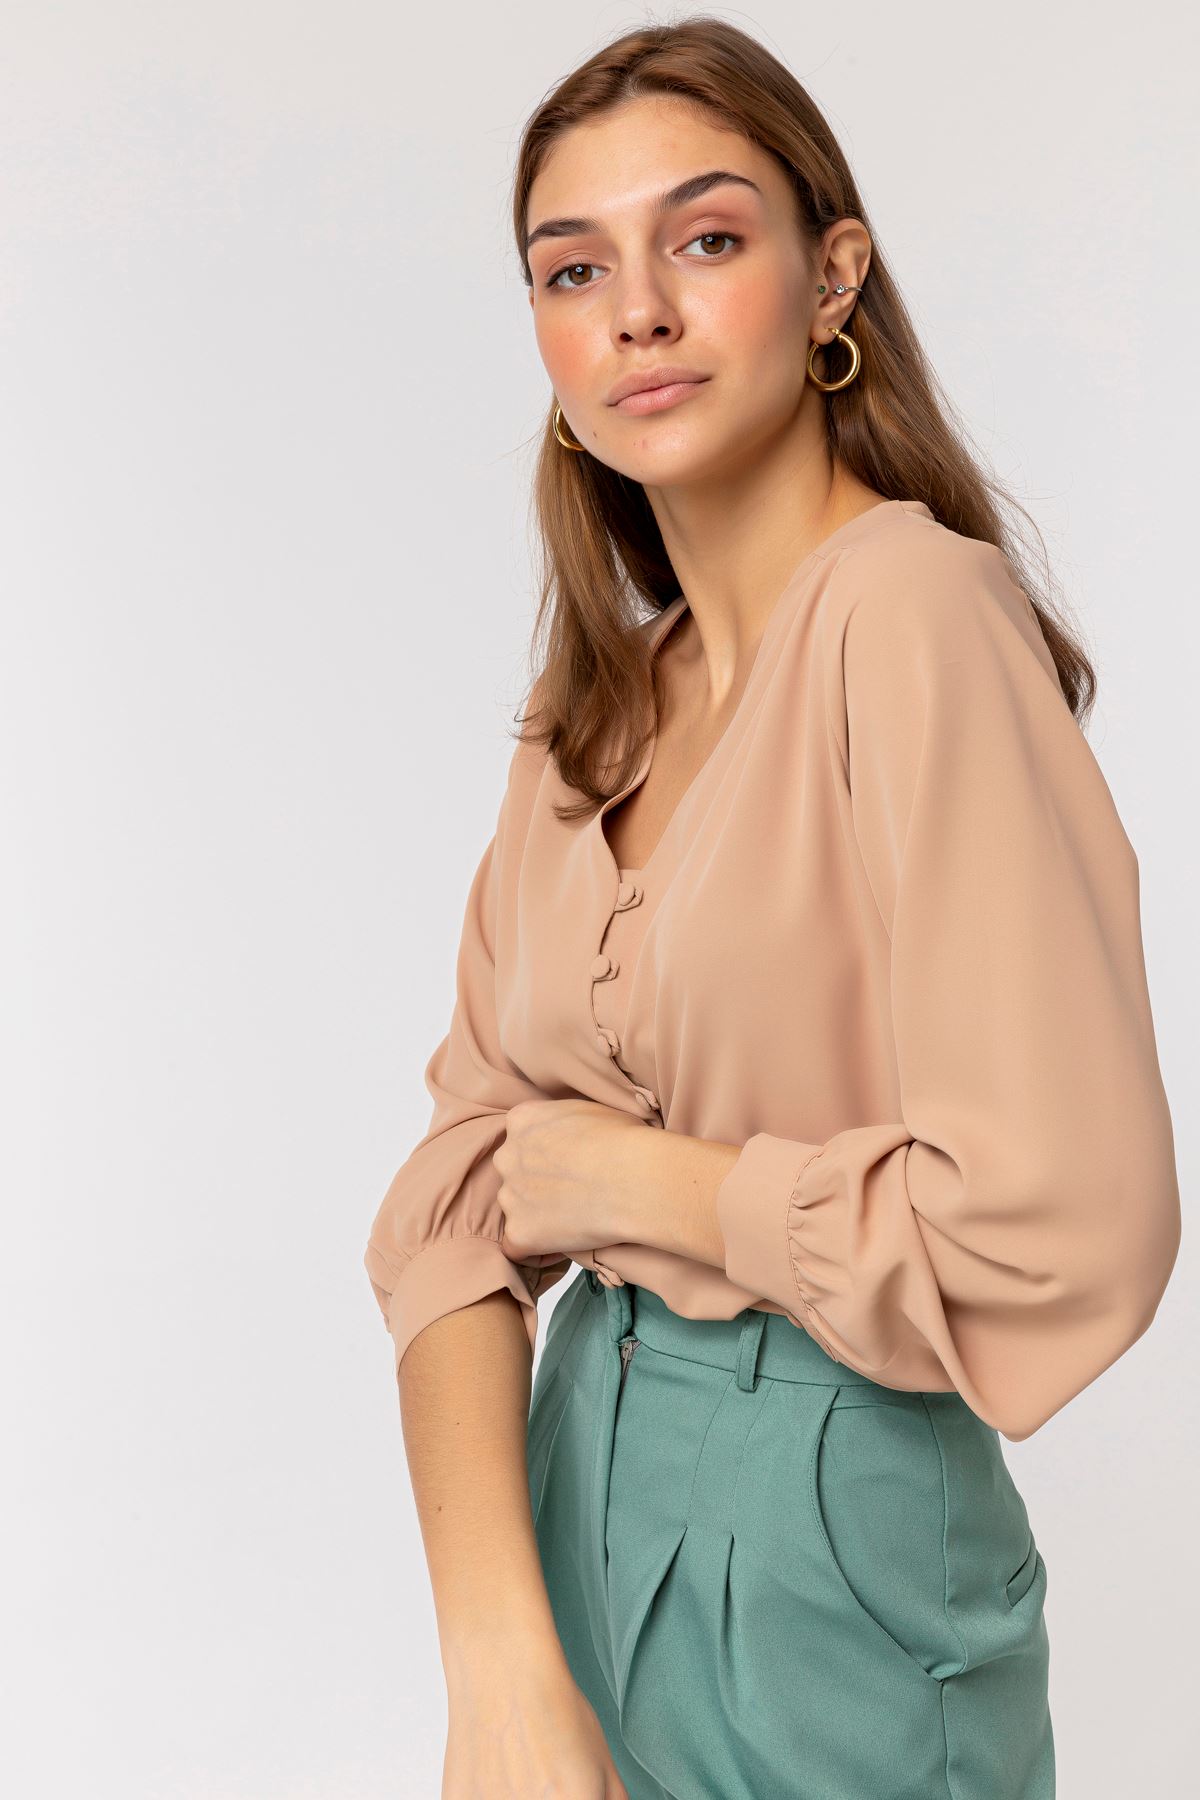 Jesica Fabric Long Sleeve V-Neck Comfy Fit Women'S Shirt - Beige 